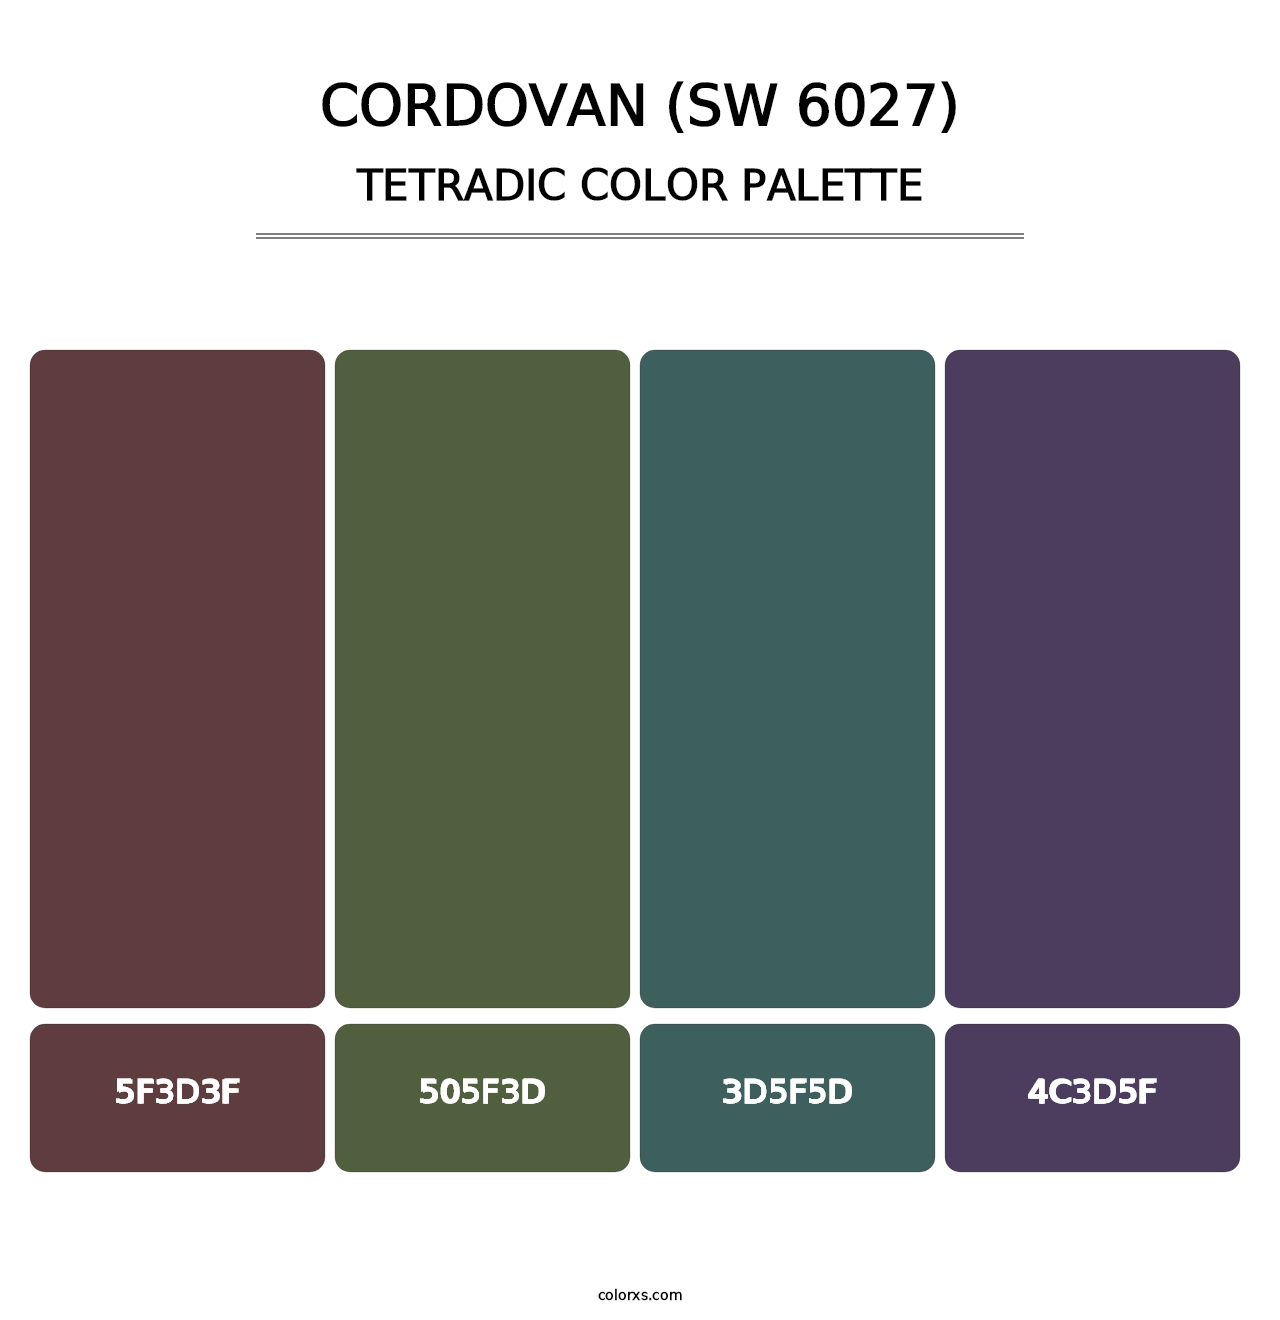 Cordovan (SW 6027) - Tetradic Color Palette